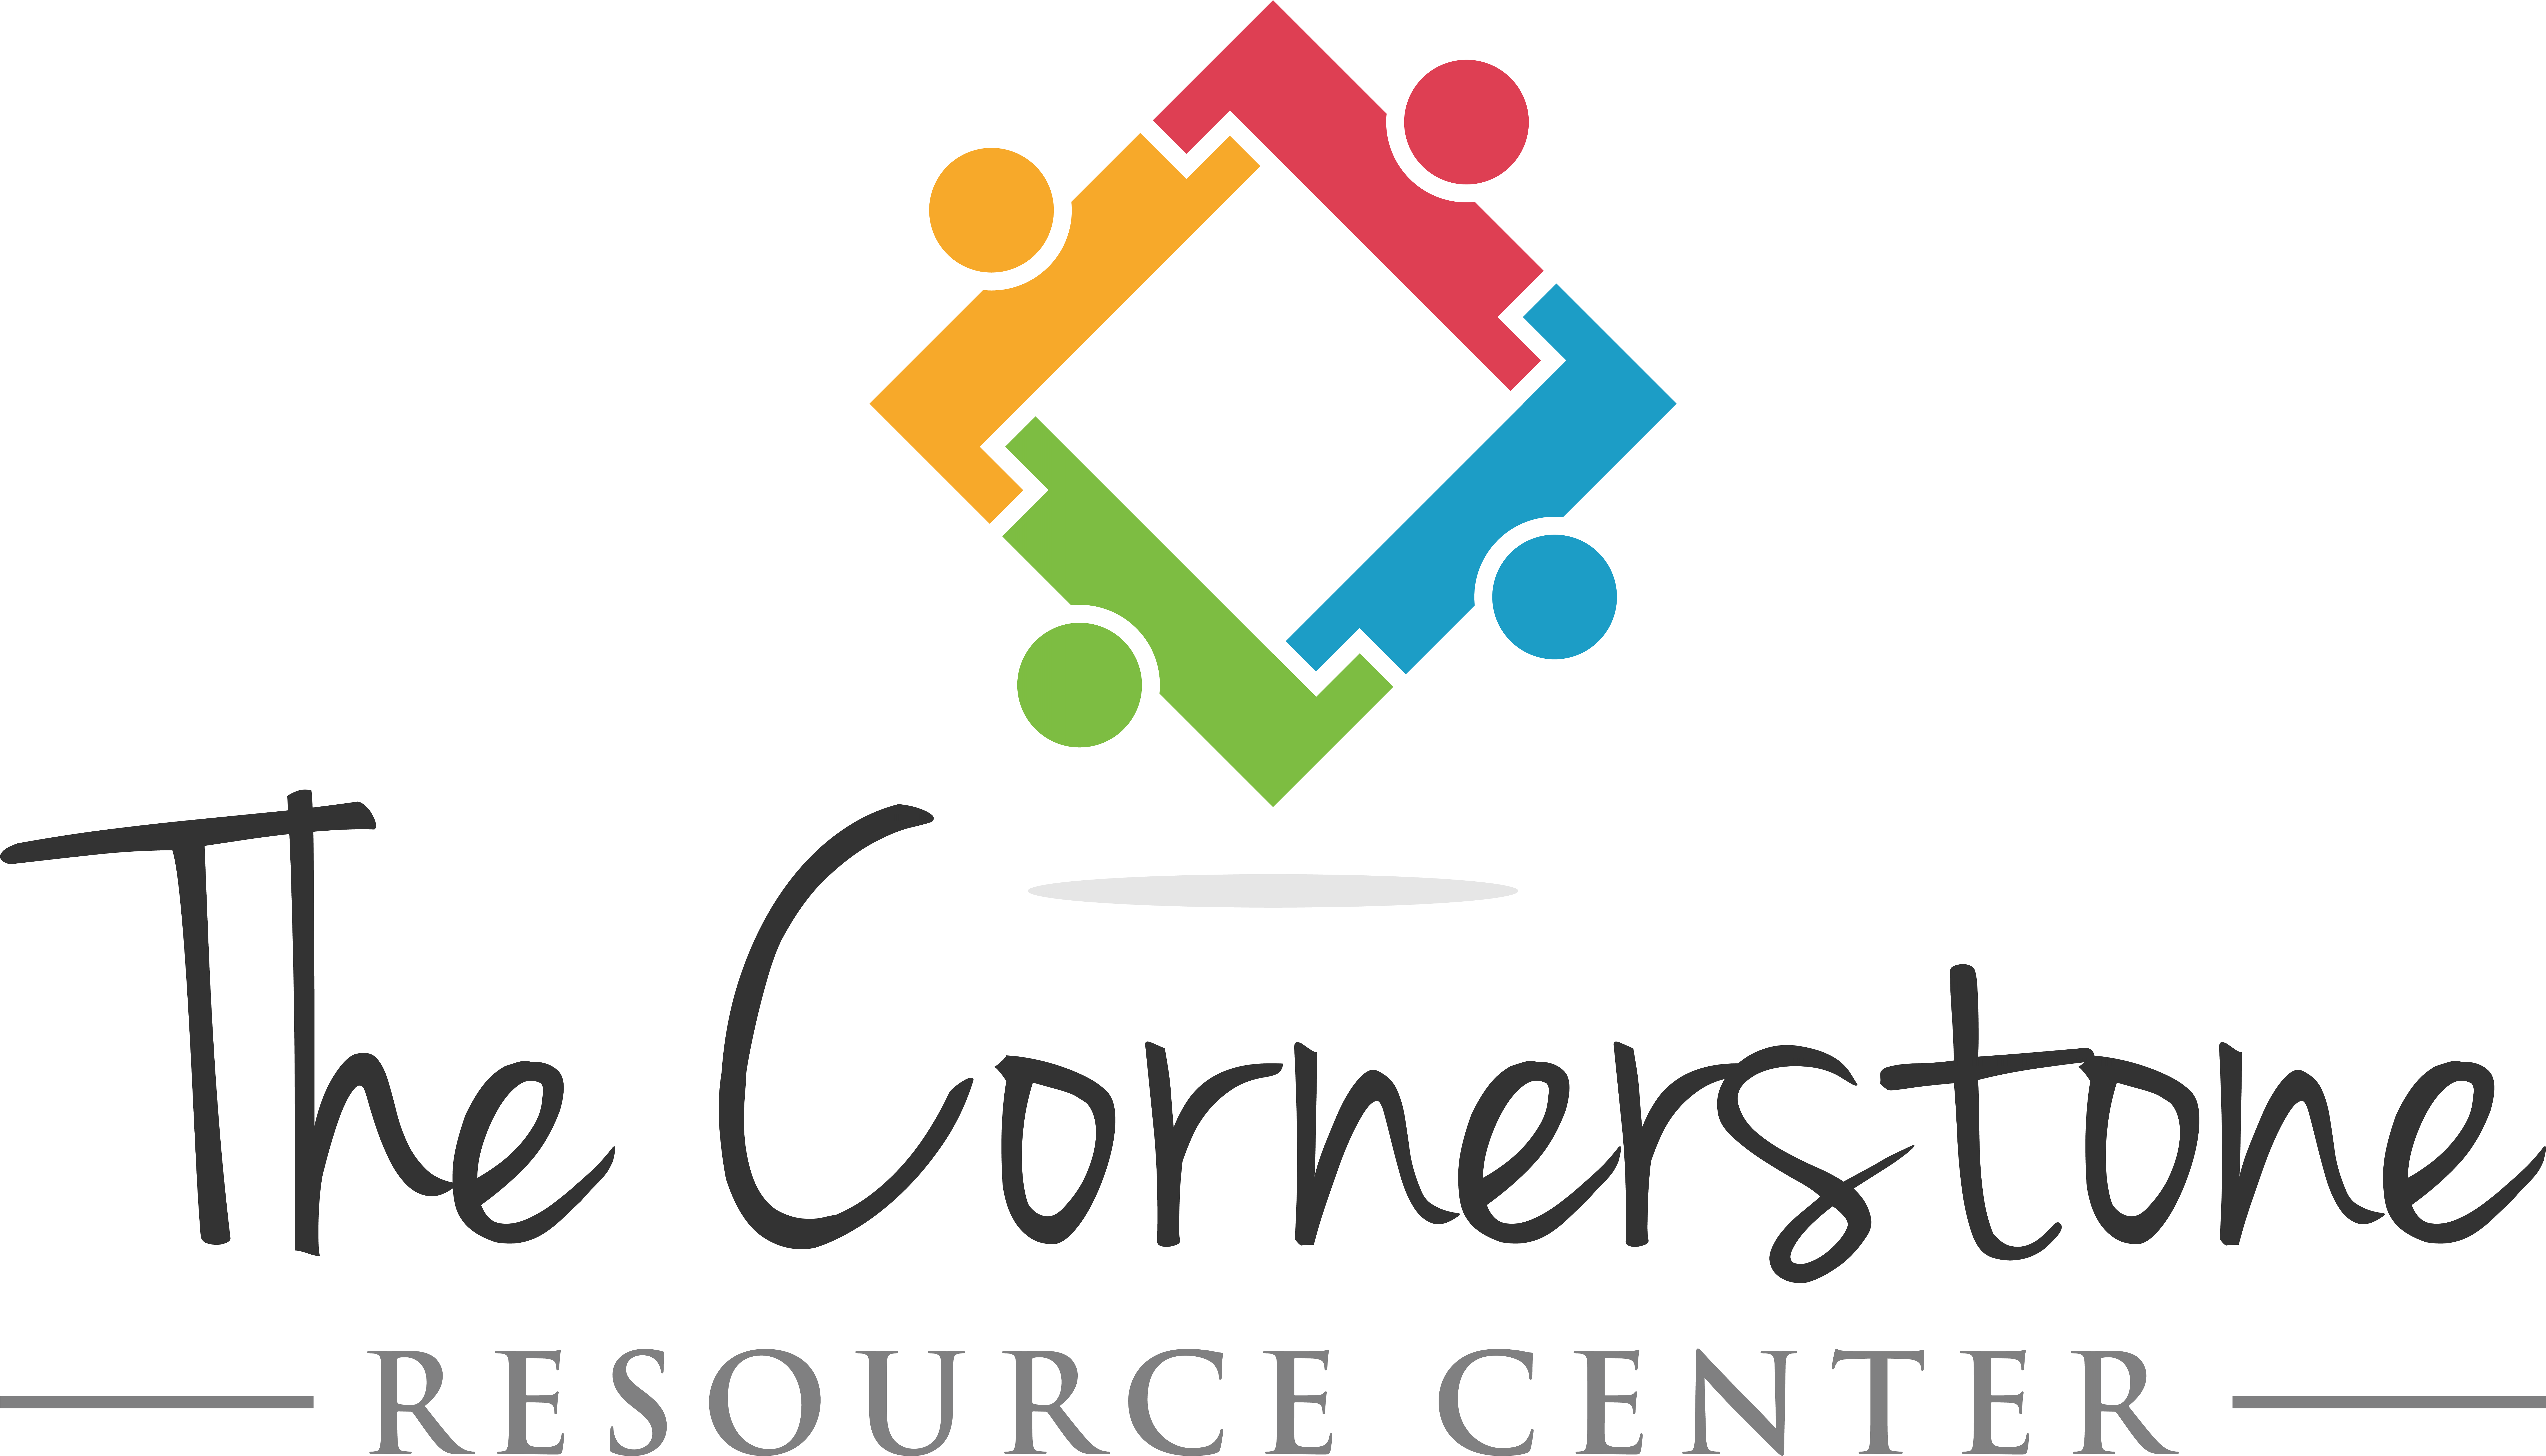 The Cornerstone Resource Center